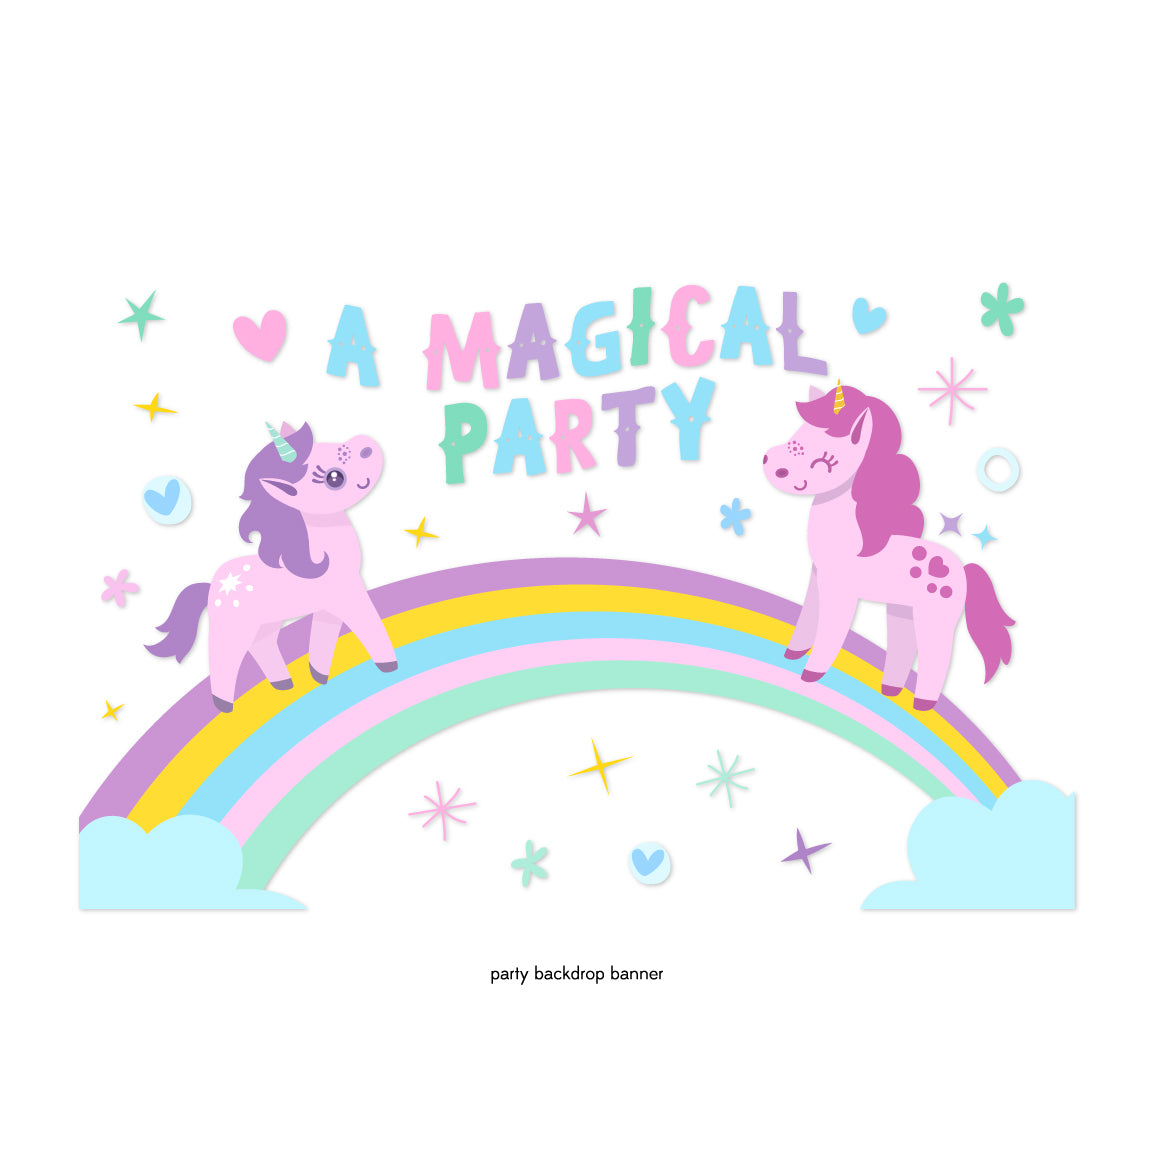 A LA CARTE, Fairytale Birthday Party, Unicorn Birthday Party, Unicorn  Party Printable, Unicorn Decorations, Unicorn, Mermaids & Fairies Birthday, Magical Birthday Party Printable, Unicorn Party